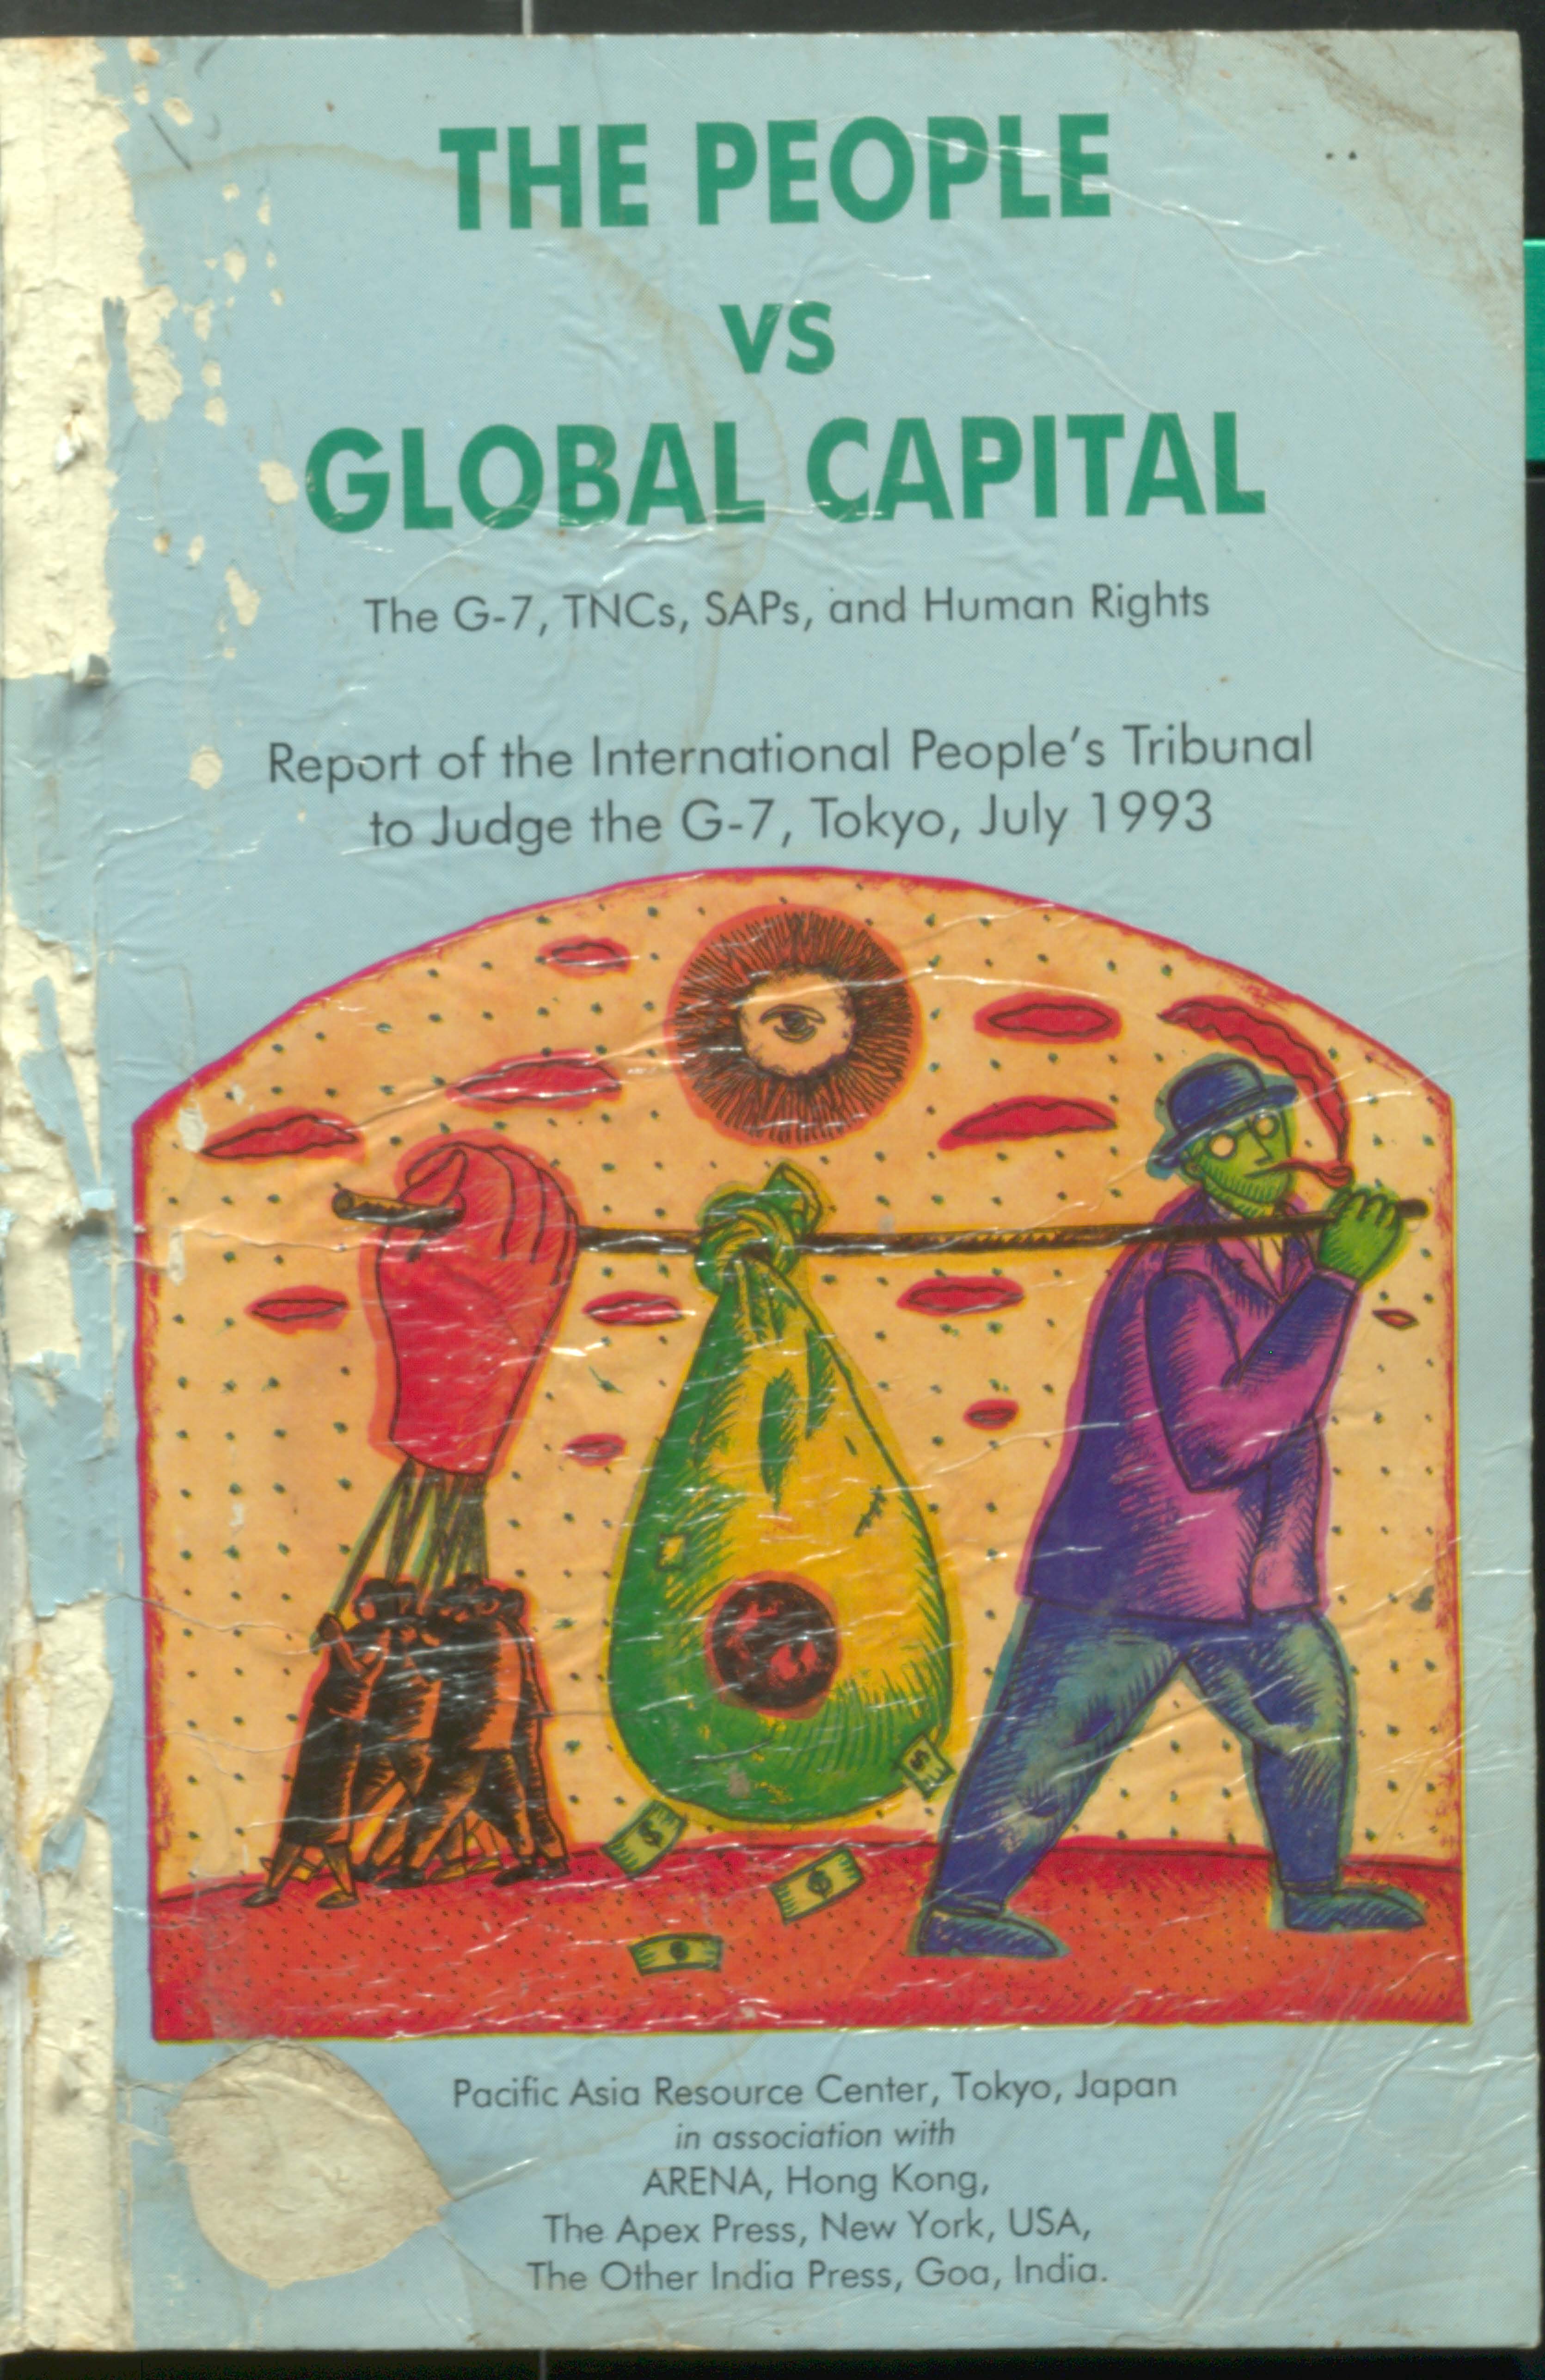 The people vs global capital